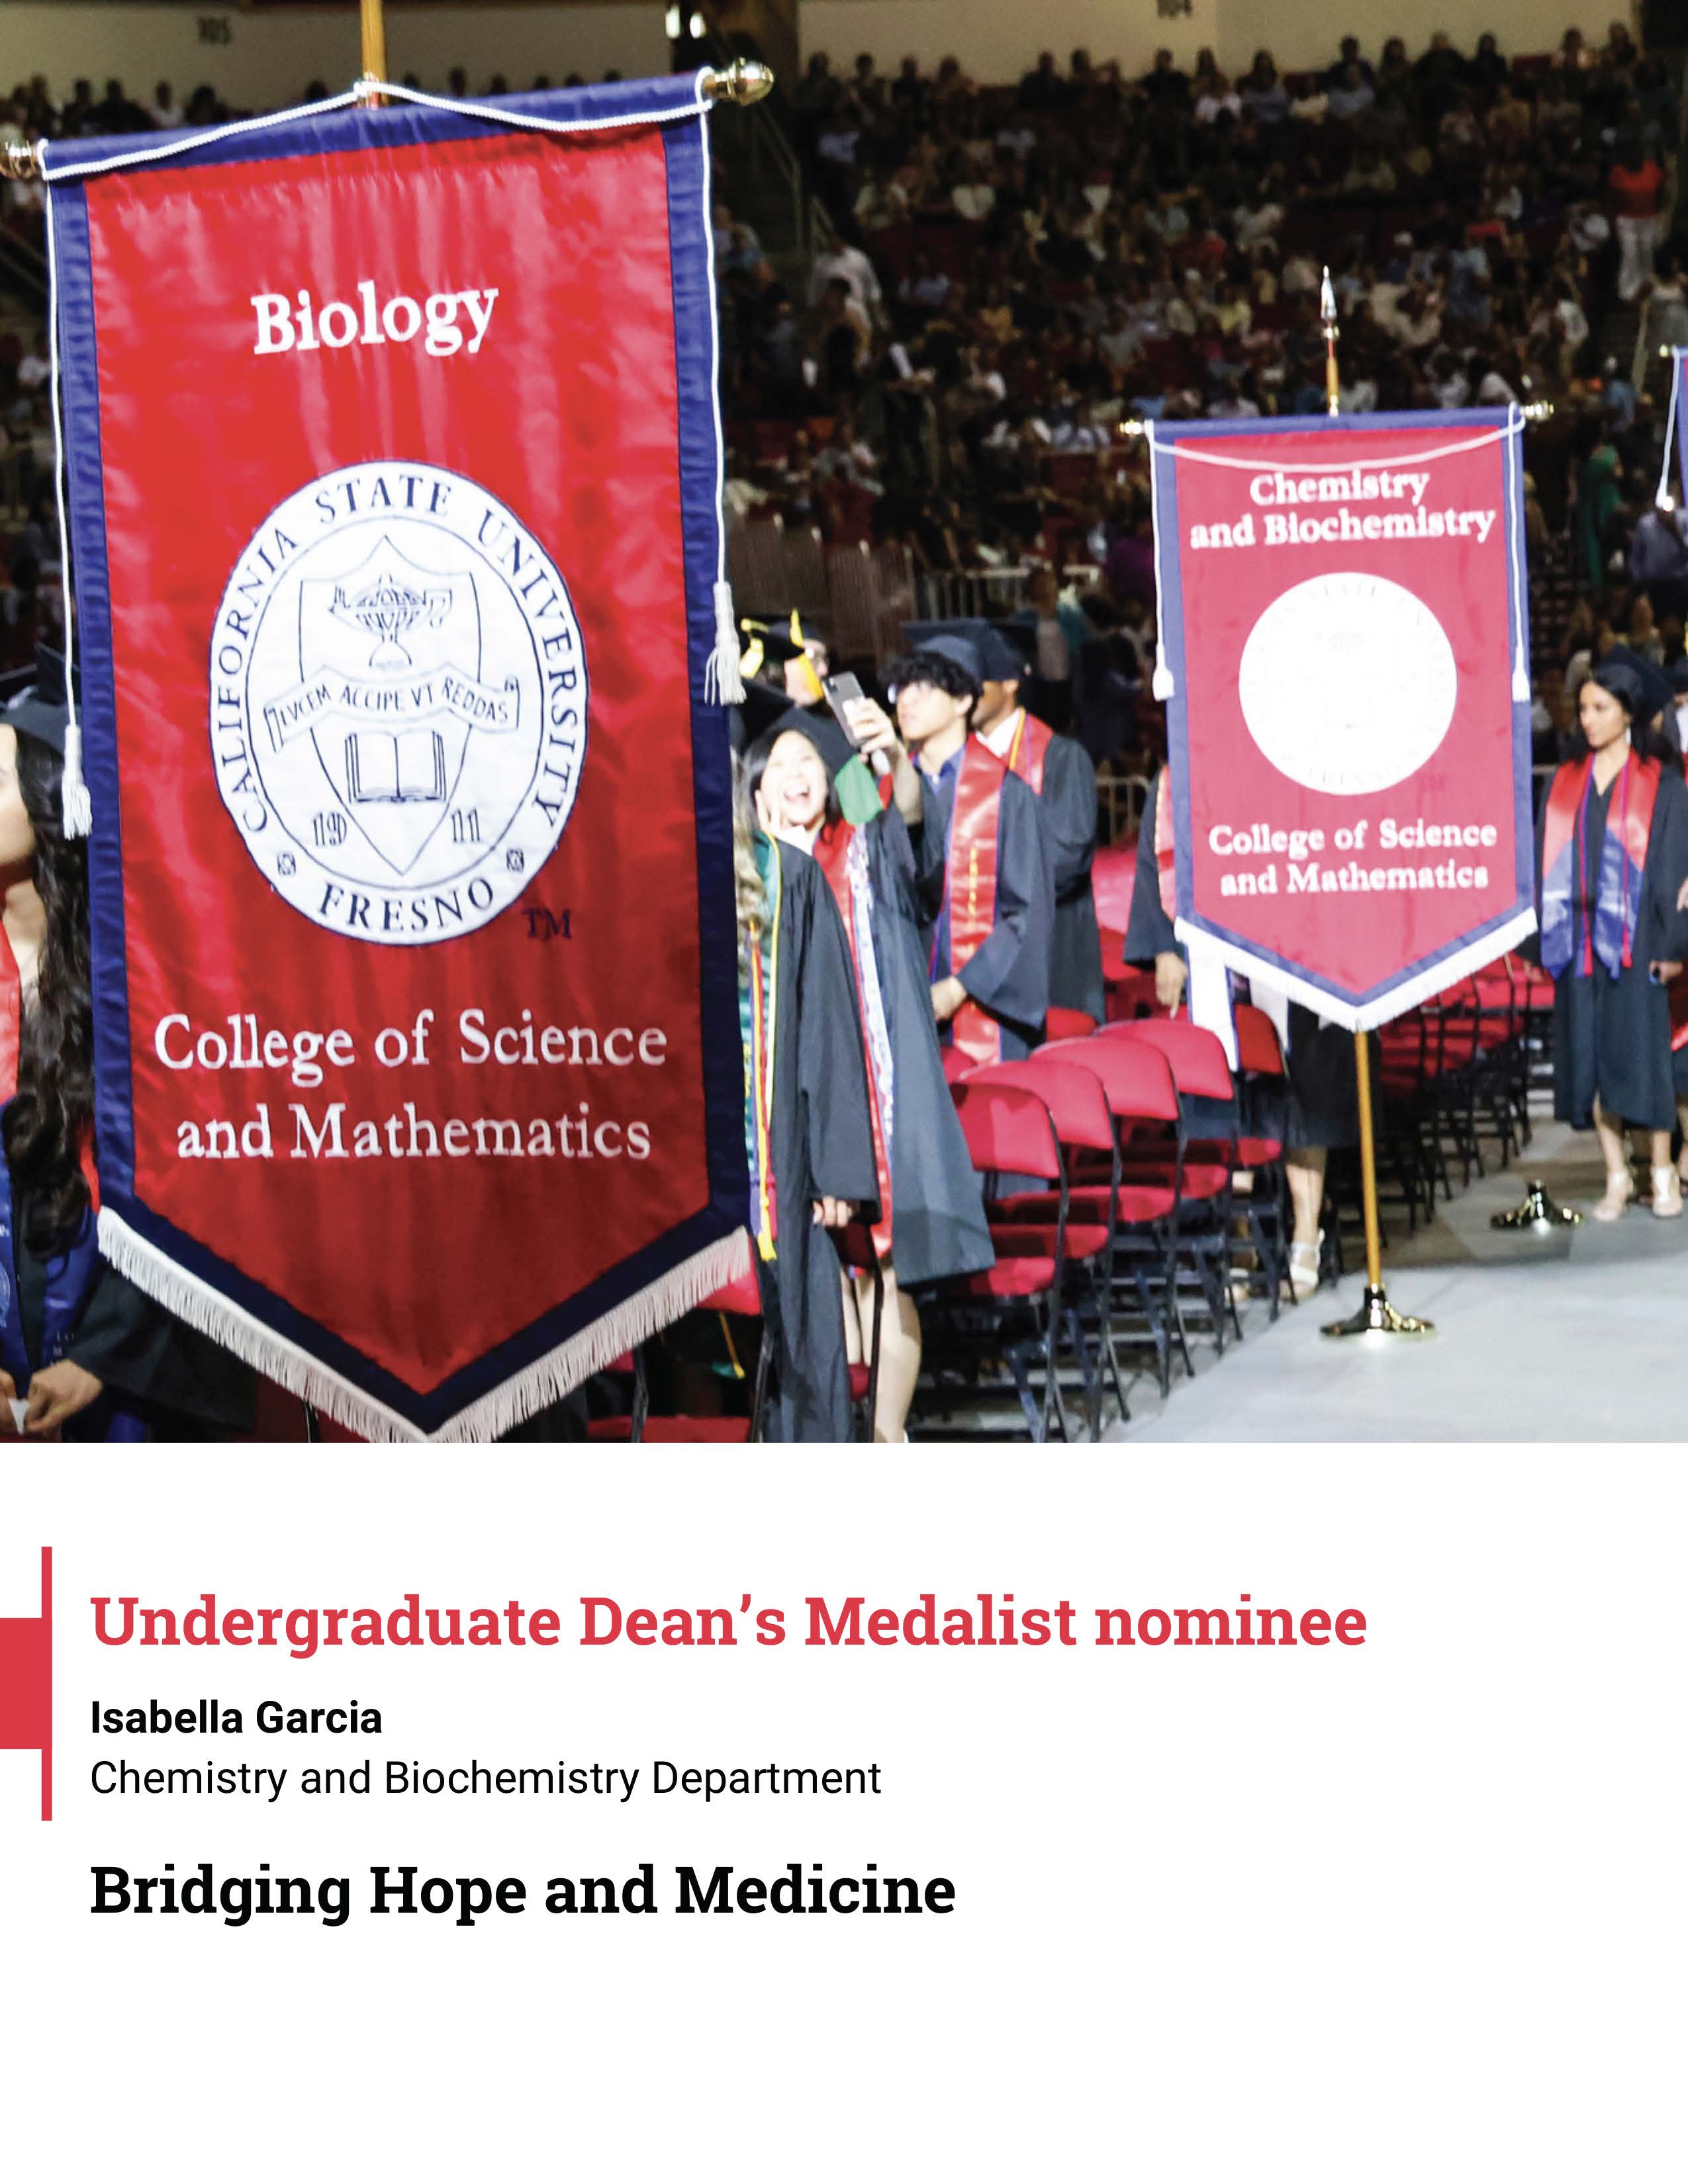 Undergraduate Dean's medalist nominee Isabella Garcia